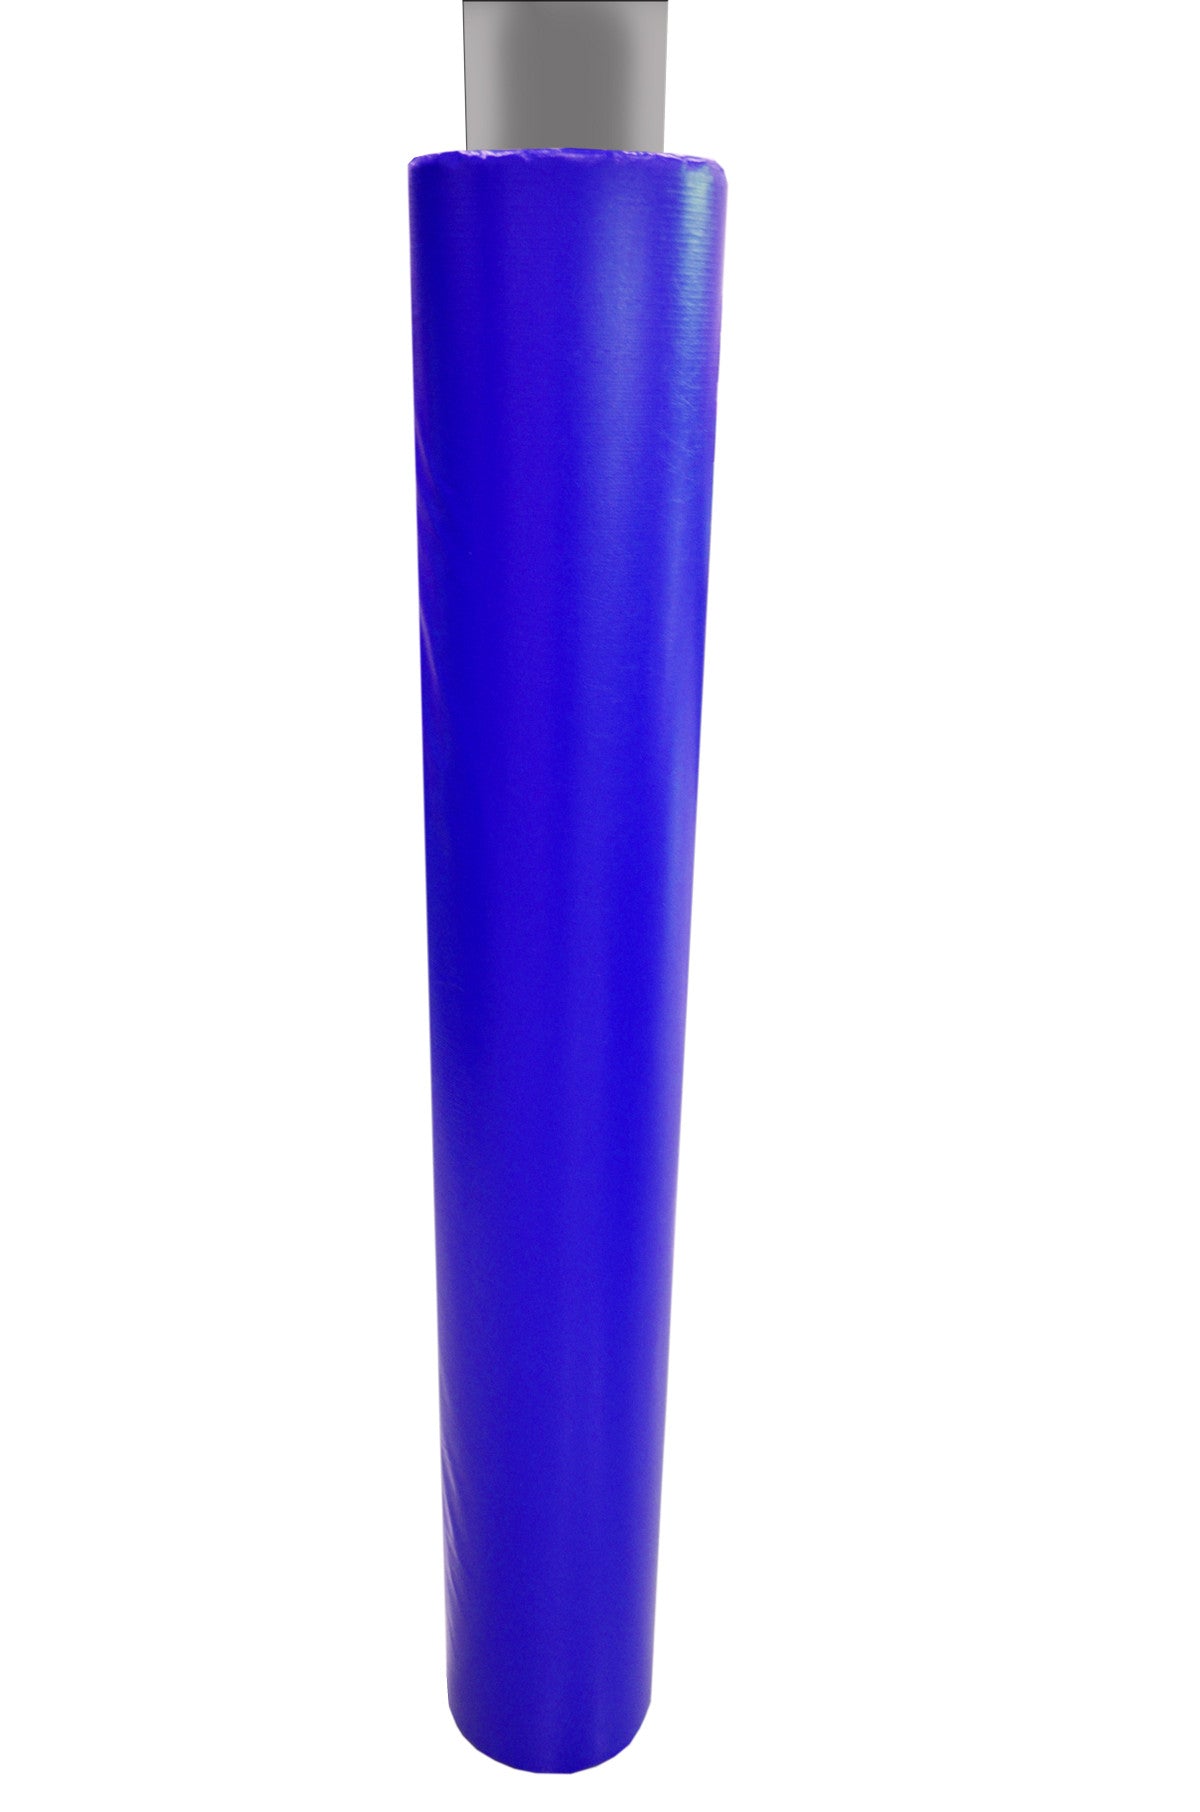 4' Tall Pole Pad, 10" Diameter with Closure Flap